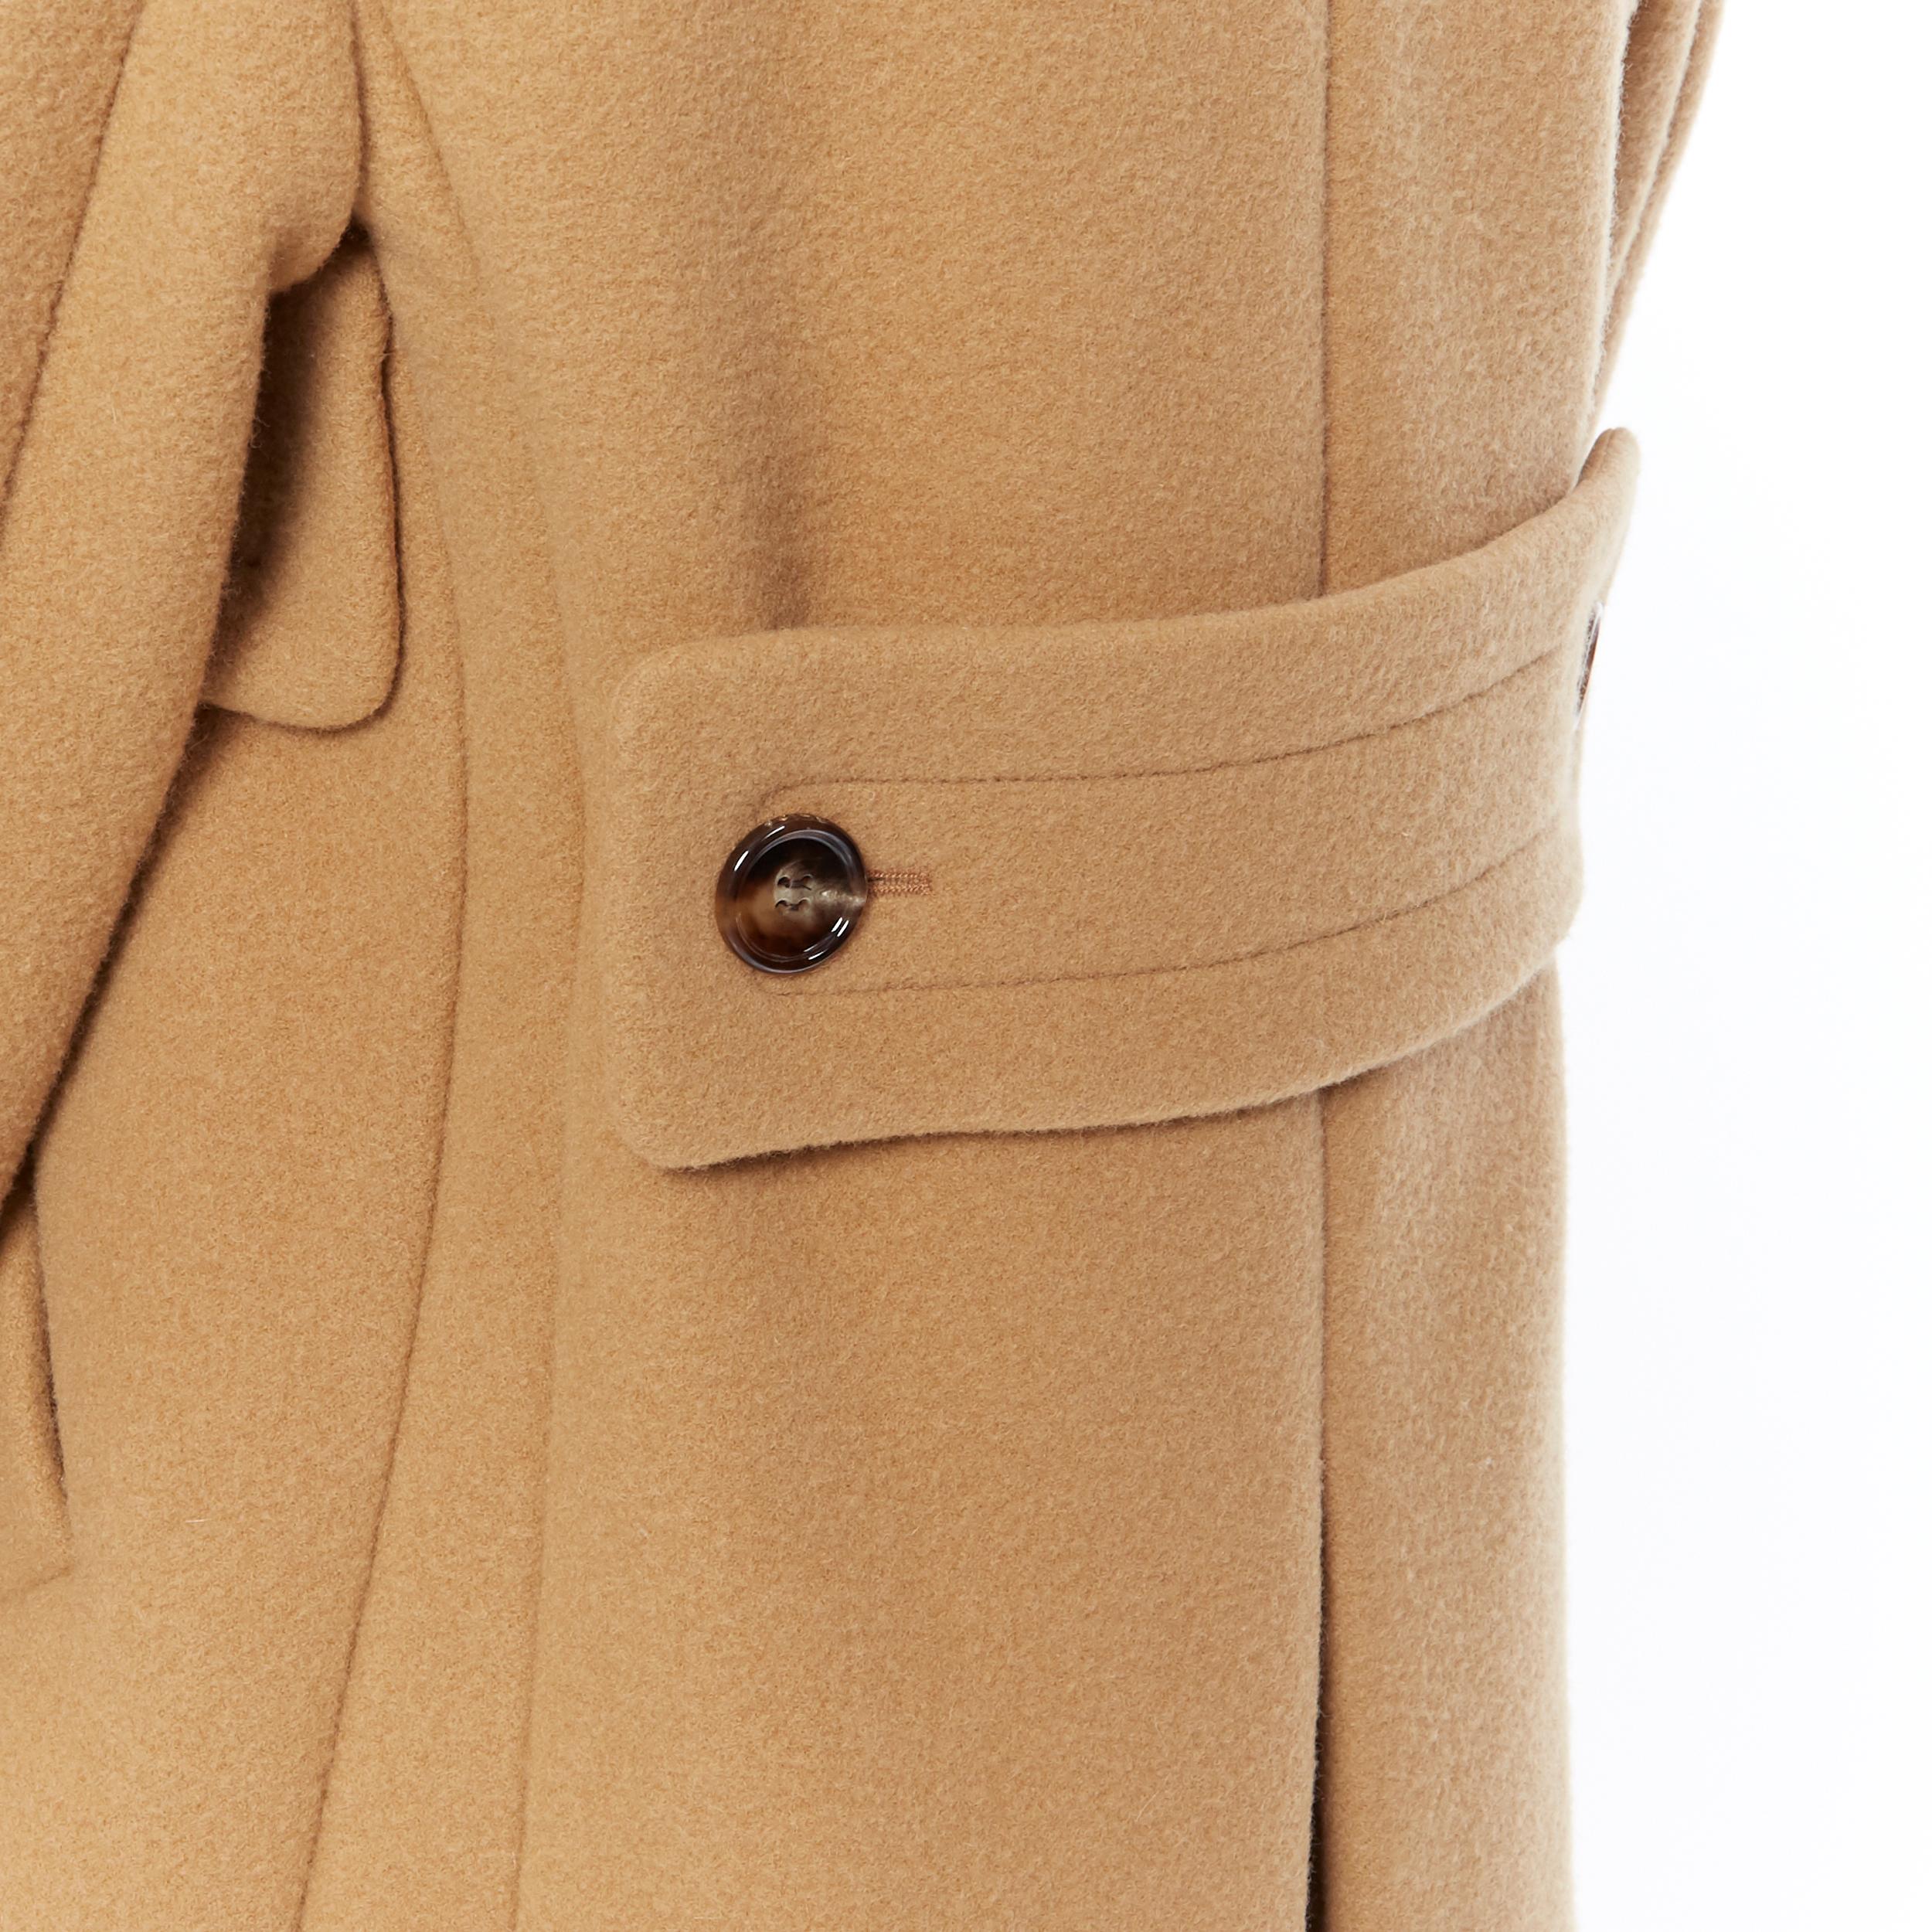 CHLOE camel beige brown thick wool felt wide collar structured winter coat S 2